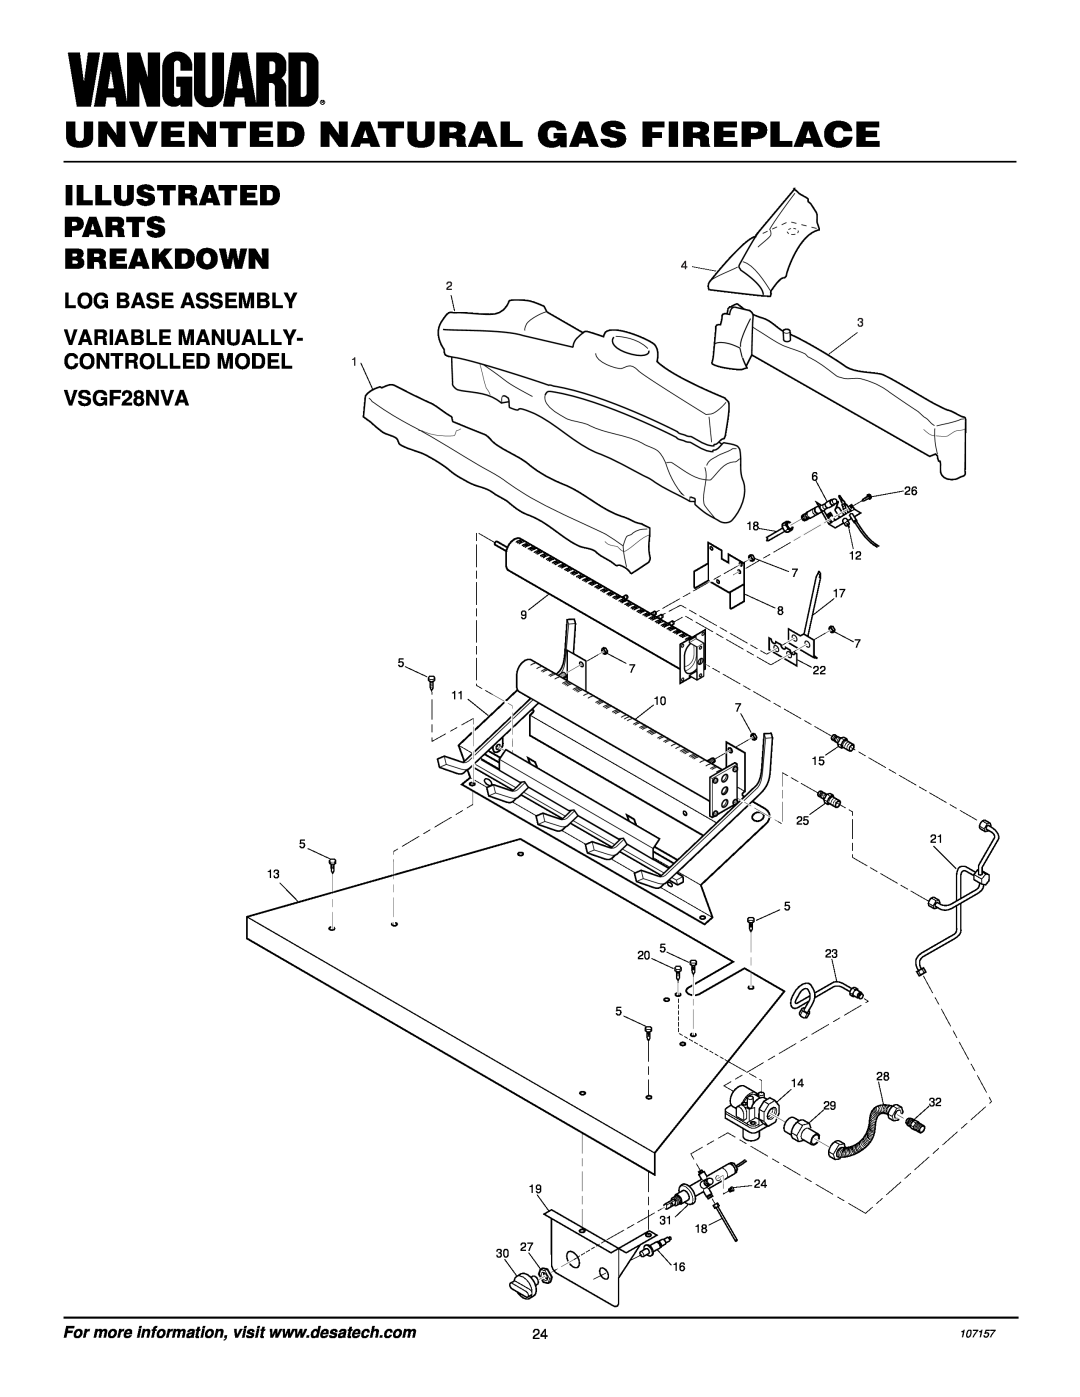 Vanguard Heating VSGF28NVA, VSGF28NTC Illustrated Parts Breakdown, Log Base Assembly, Variable Manually, Controlled Model 